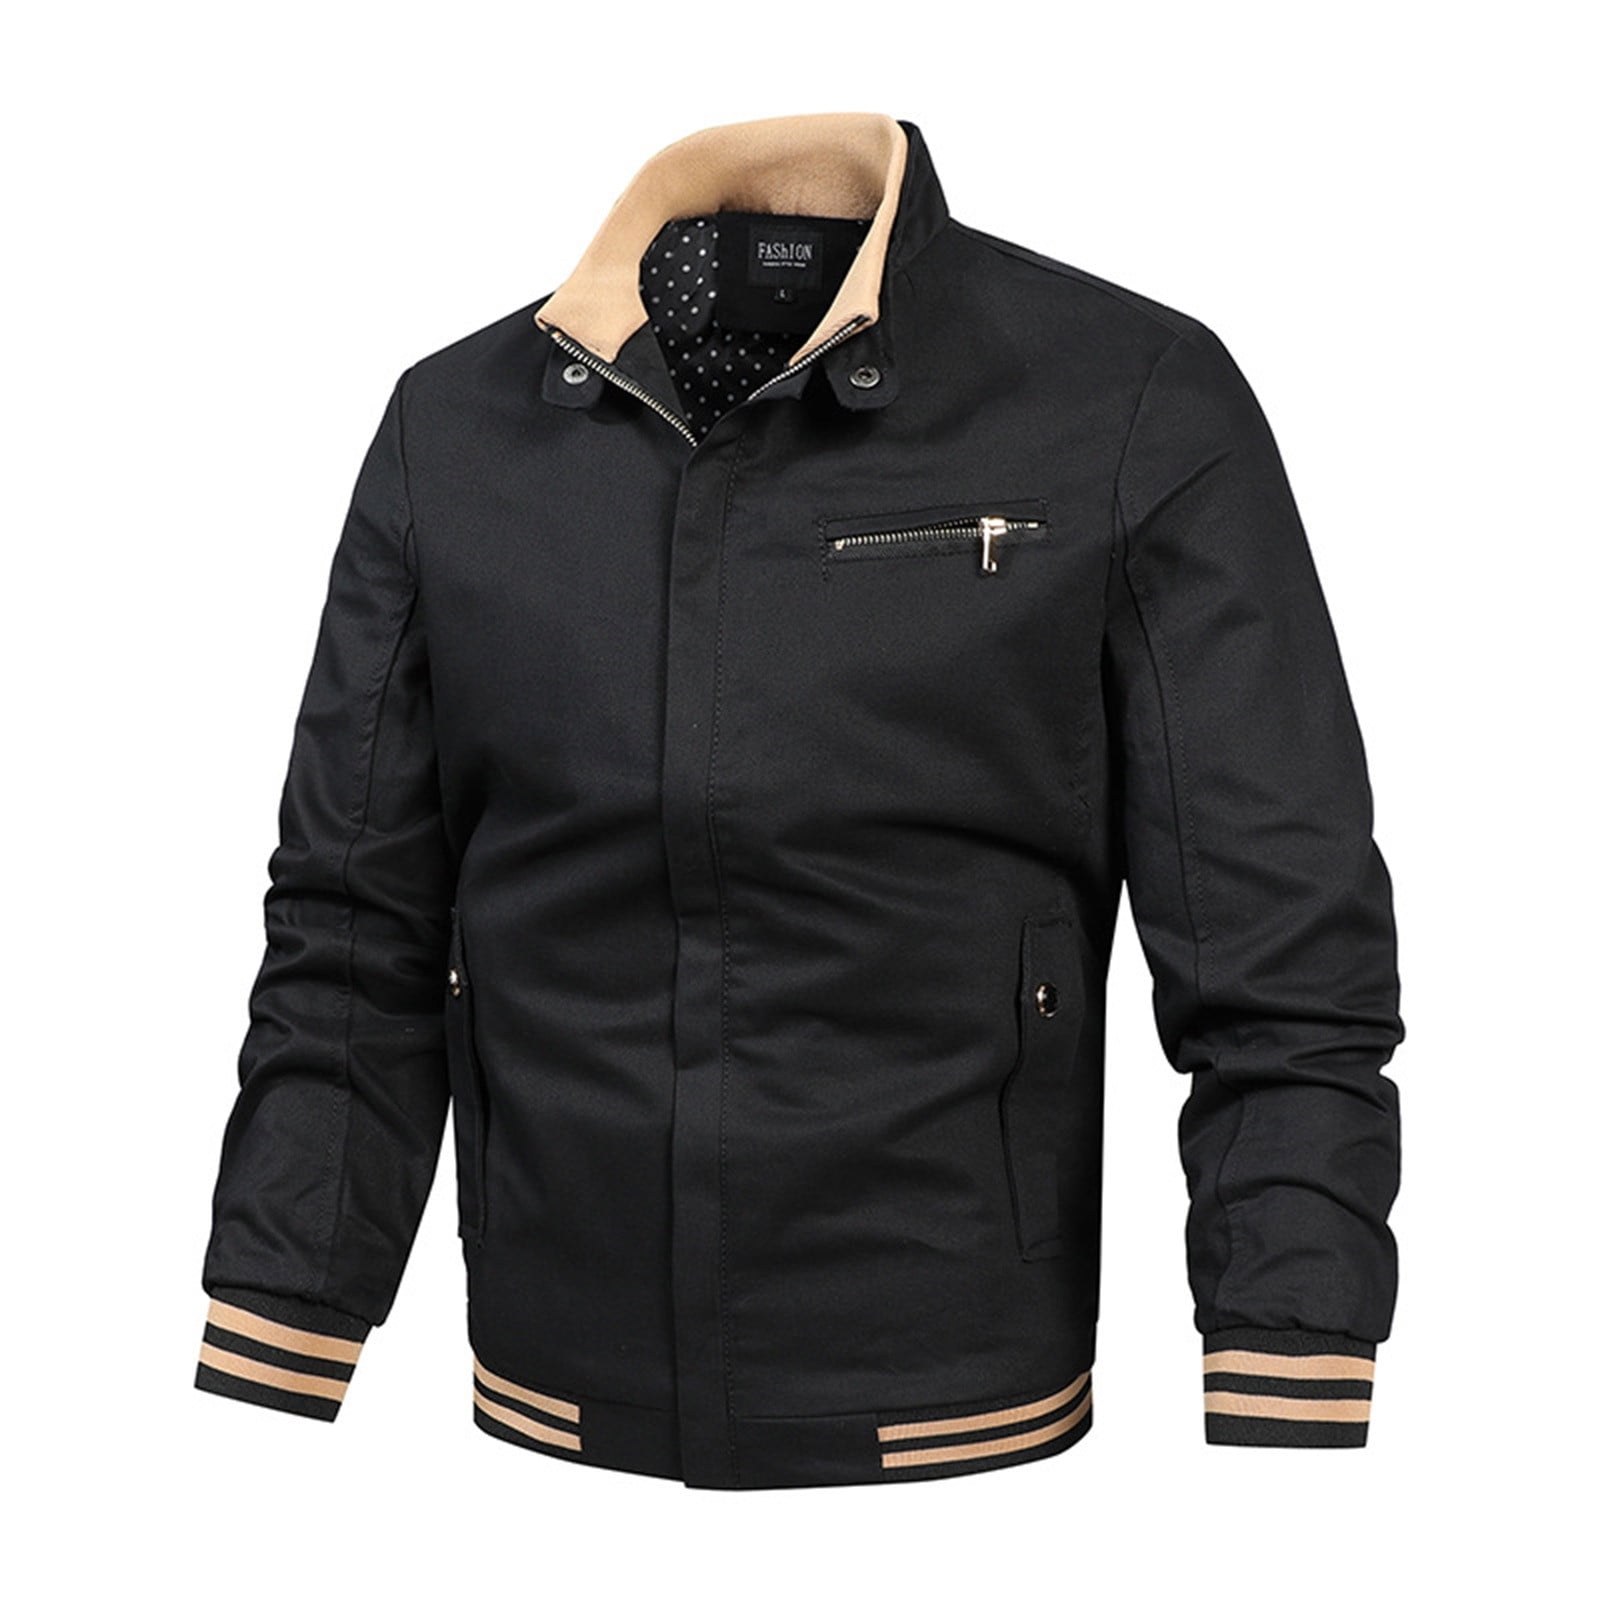 Black Jacket for Men,Men's Lightweight Cotton Jackets Spring And Autumn ...